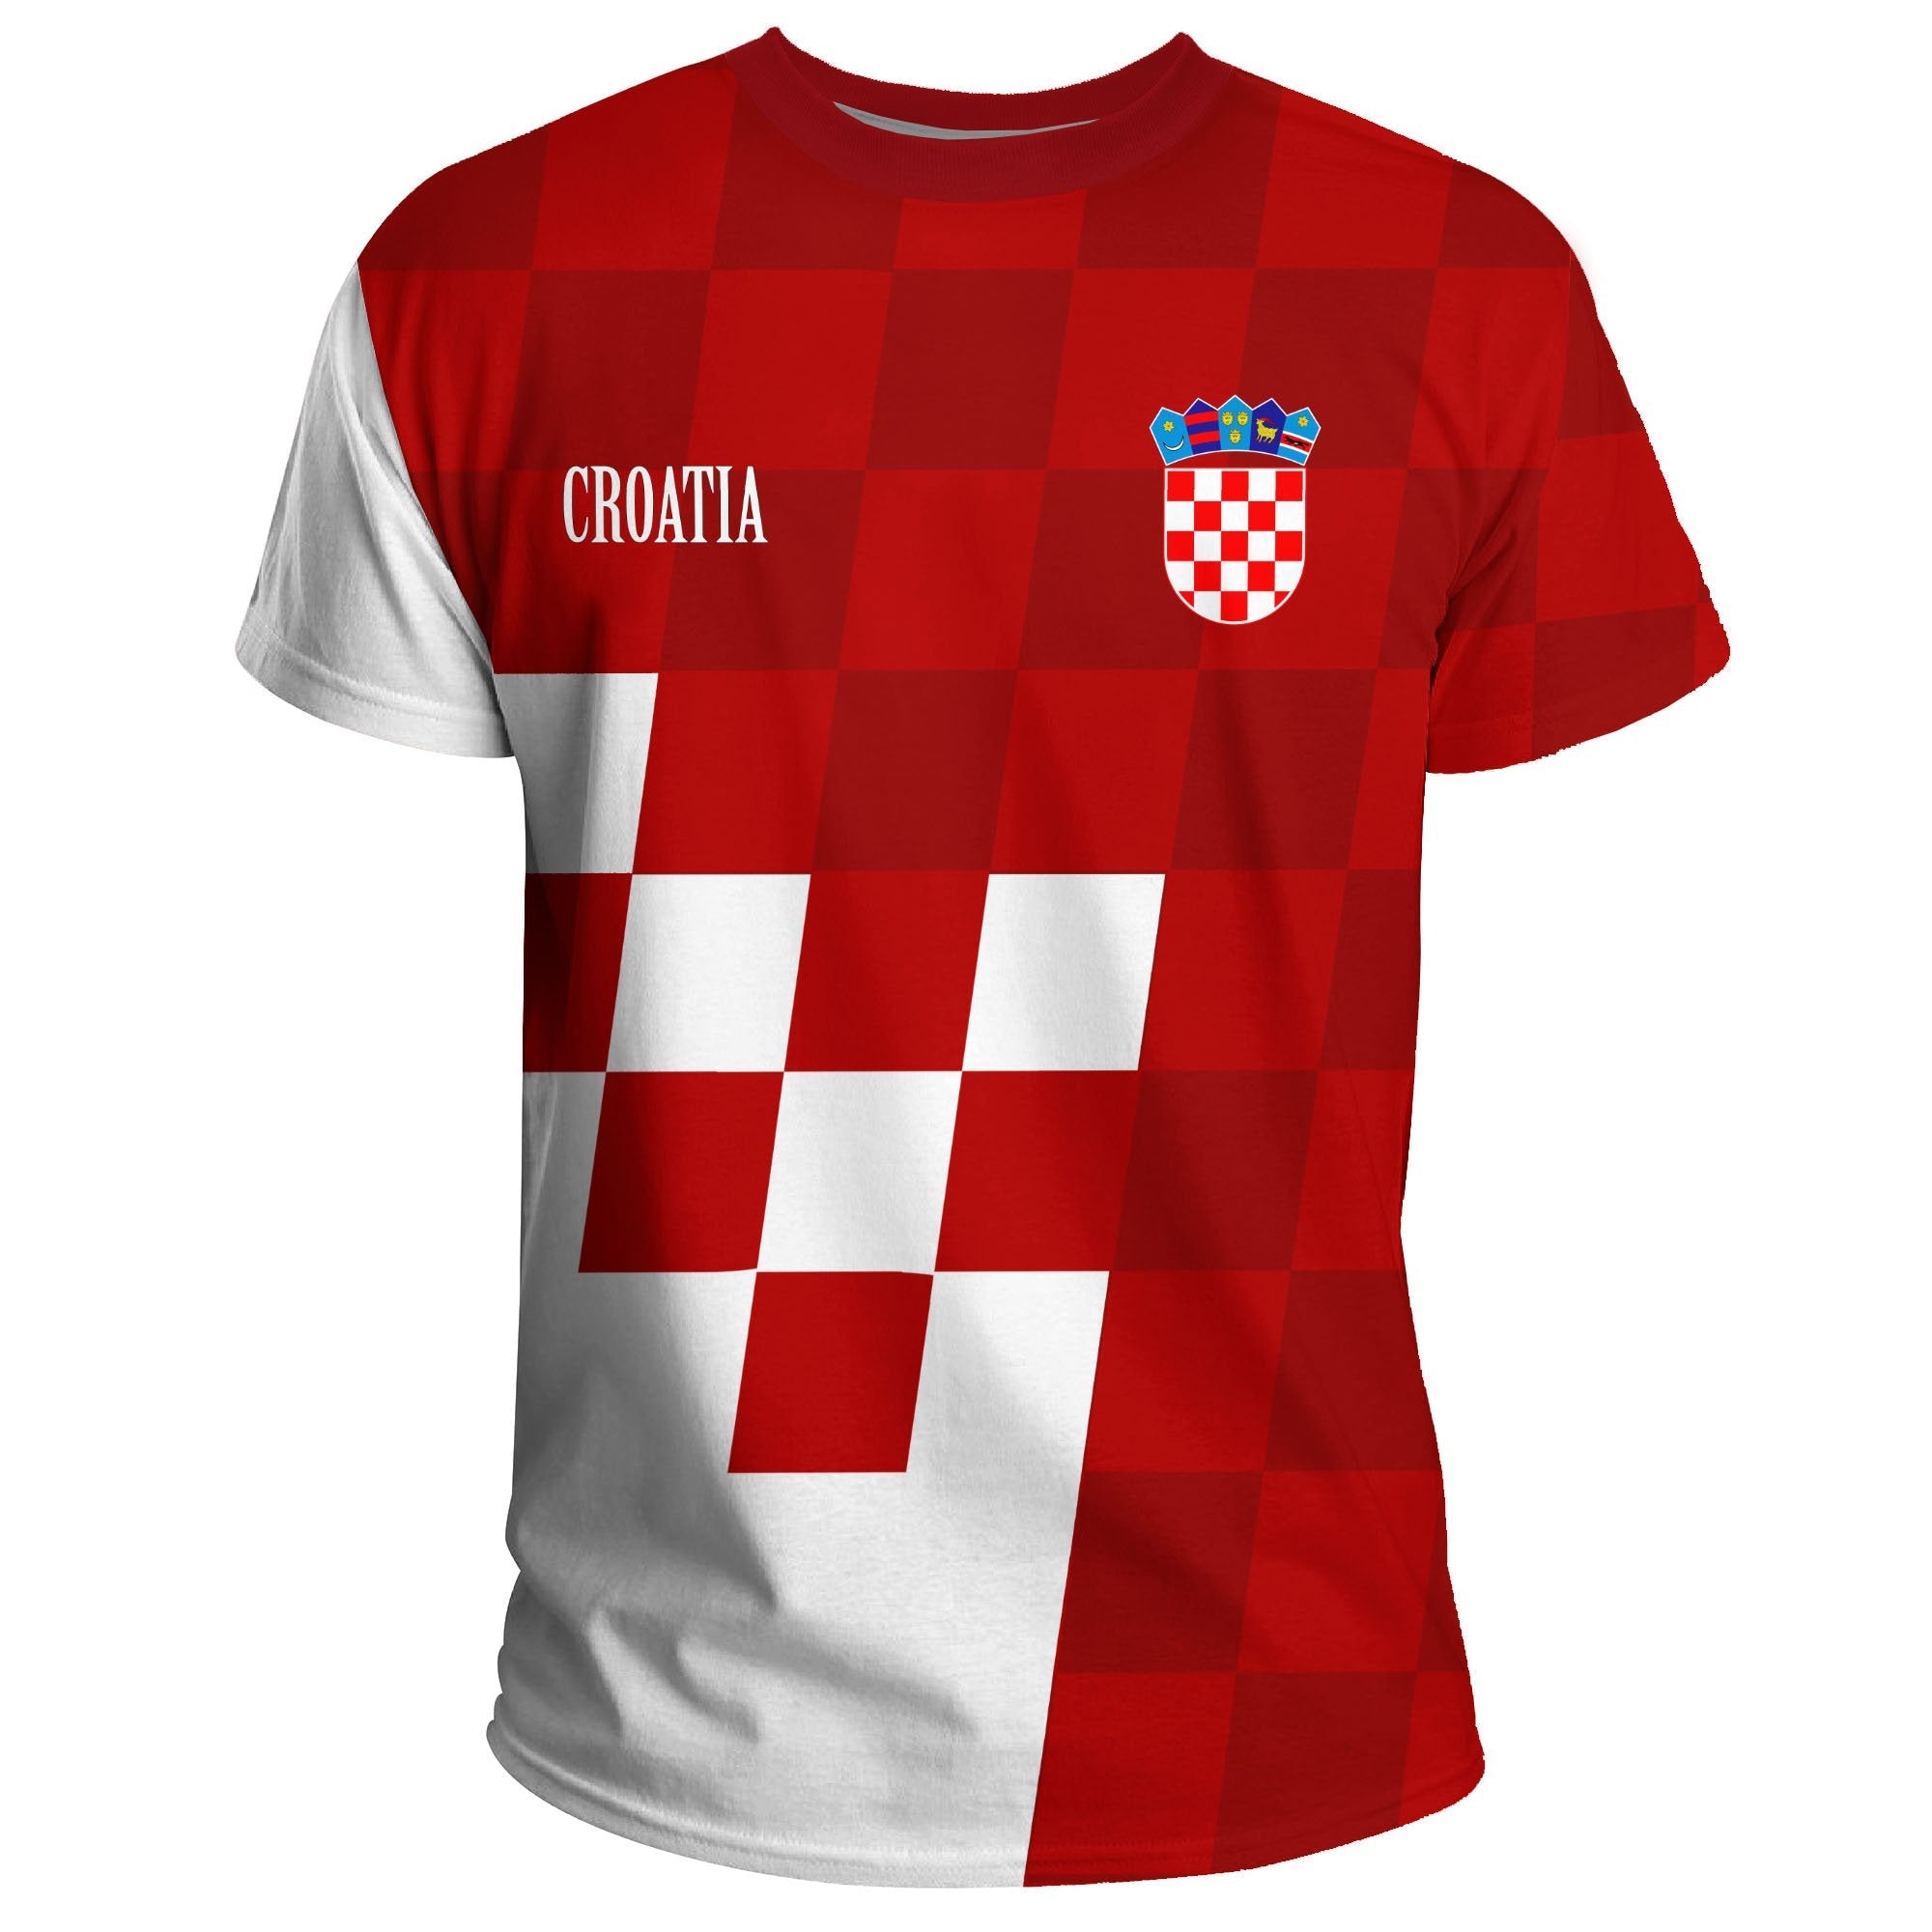 croatia-coat-of-arms-t-shirt-special-version